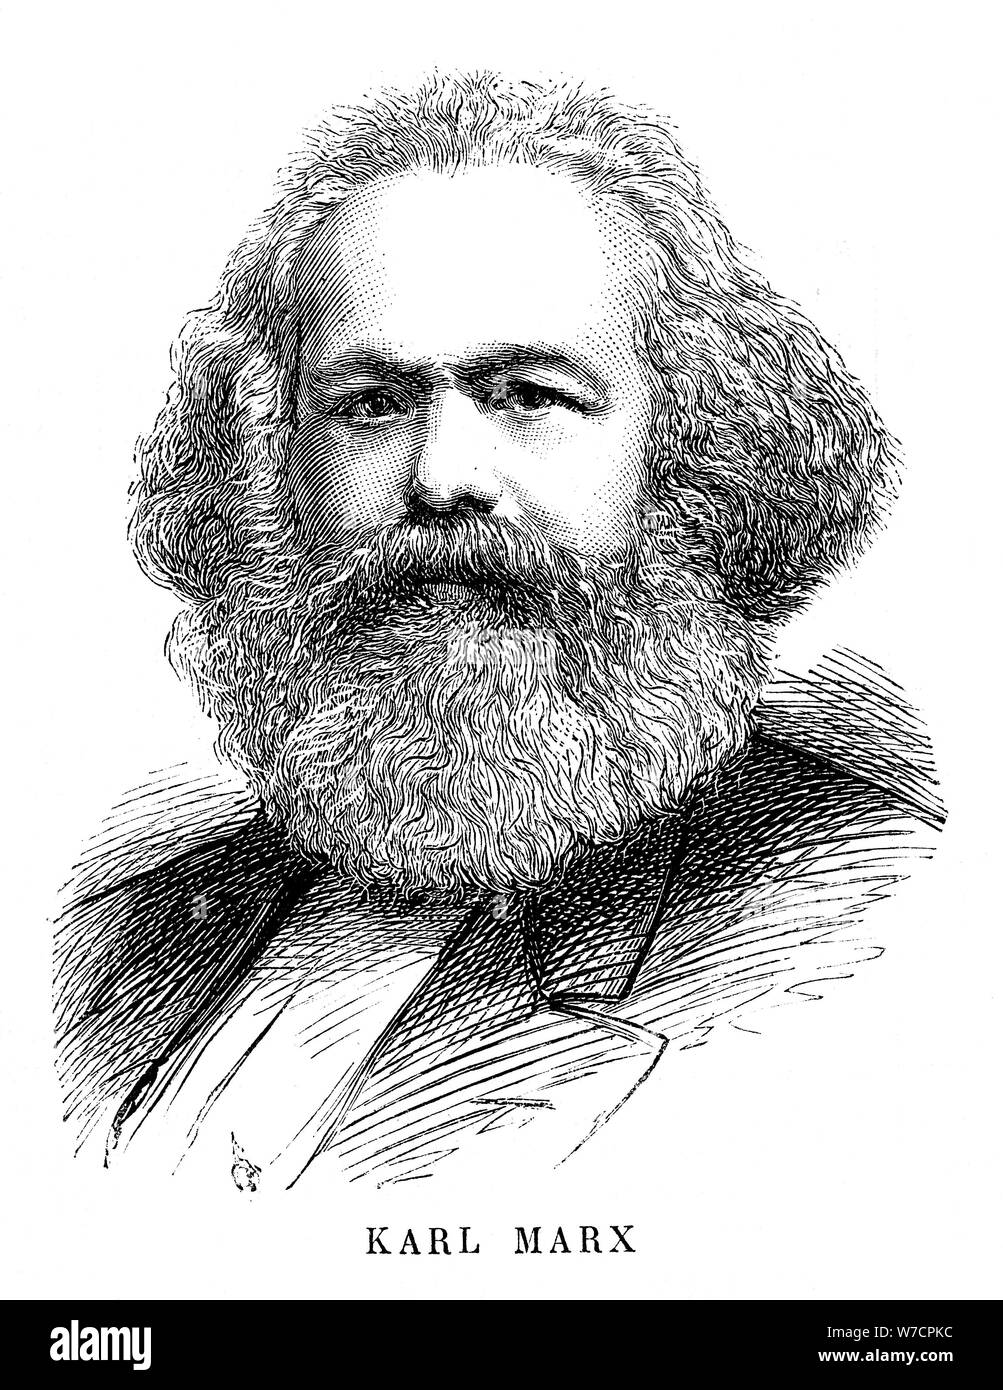 Karl Marx, 19th century German political, social and economic theorist. Artist: Unknown Stock Photo